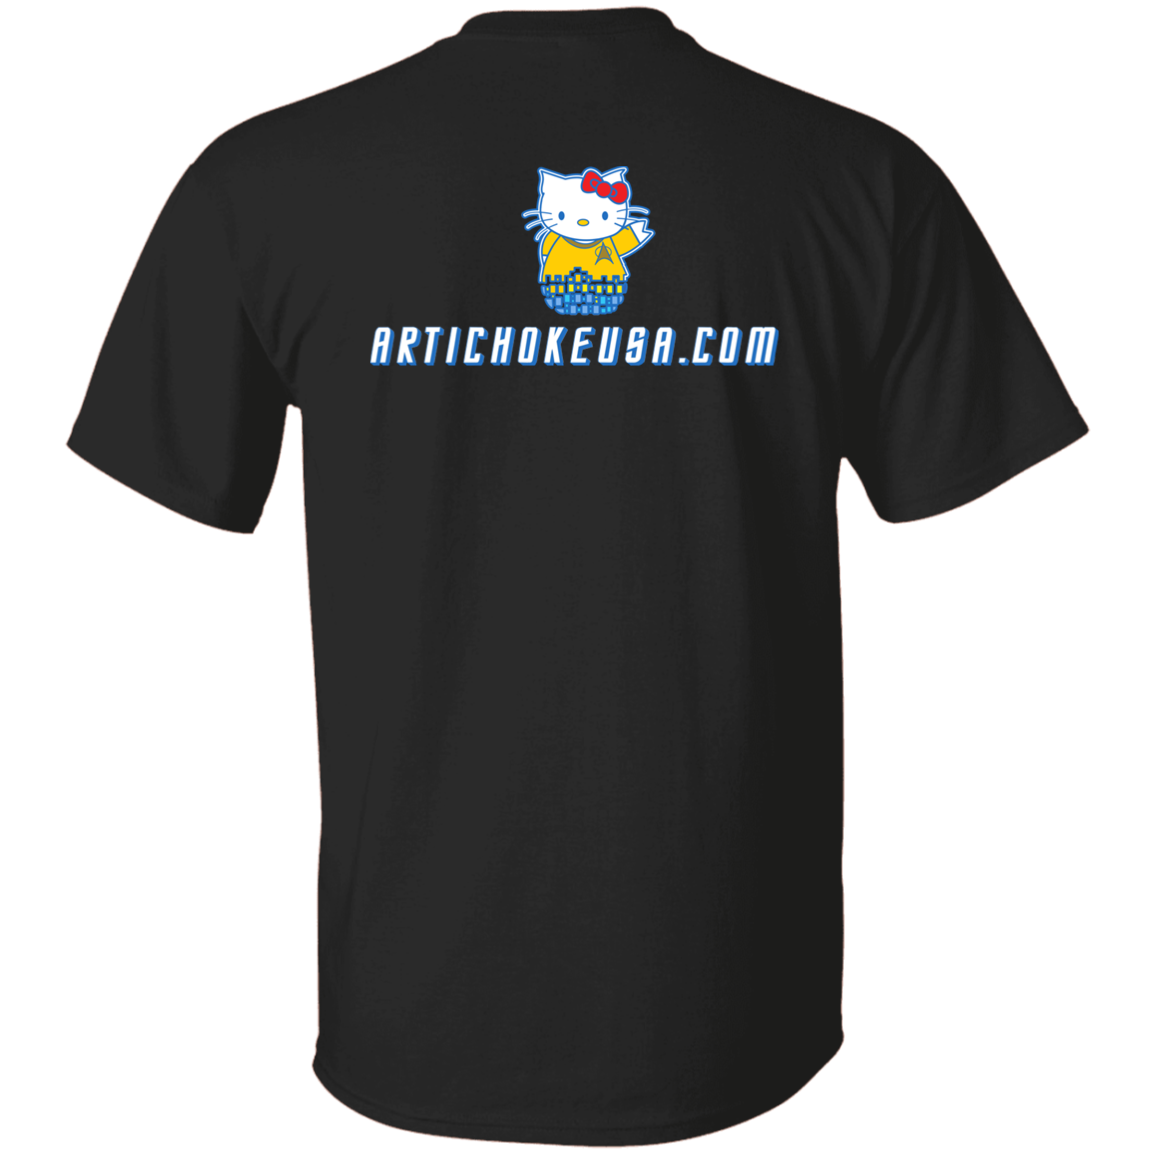 ArtichokeUSA Custom Design. Beam Me Up Kitty. Fan Art / Parody. 100% Cotton T-Shirt